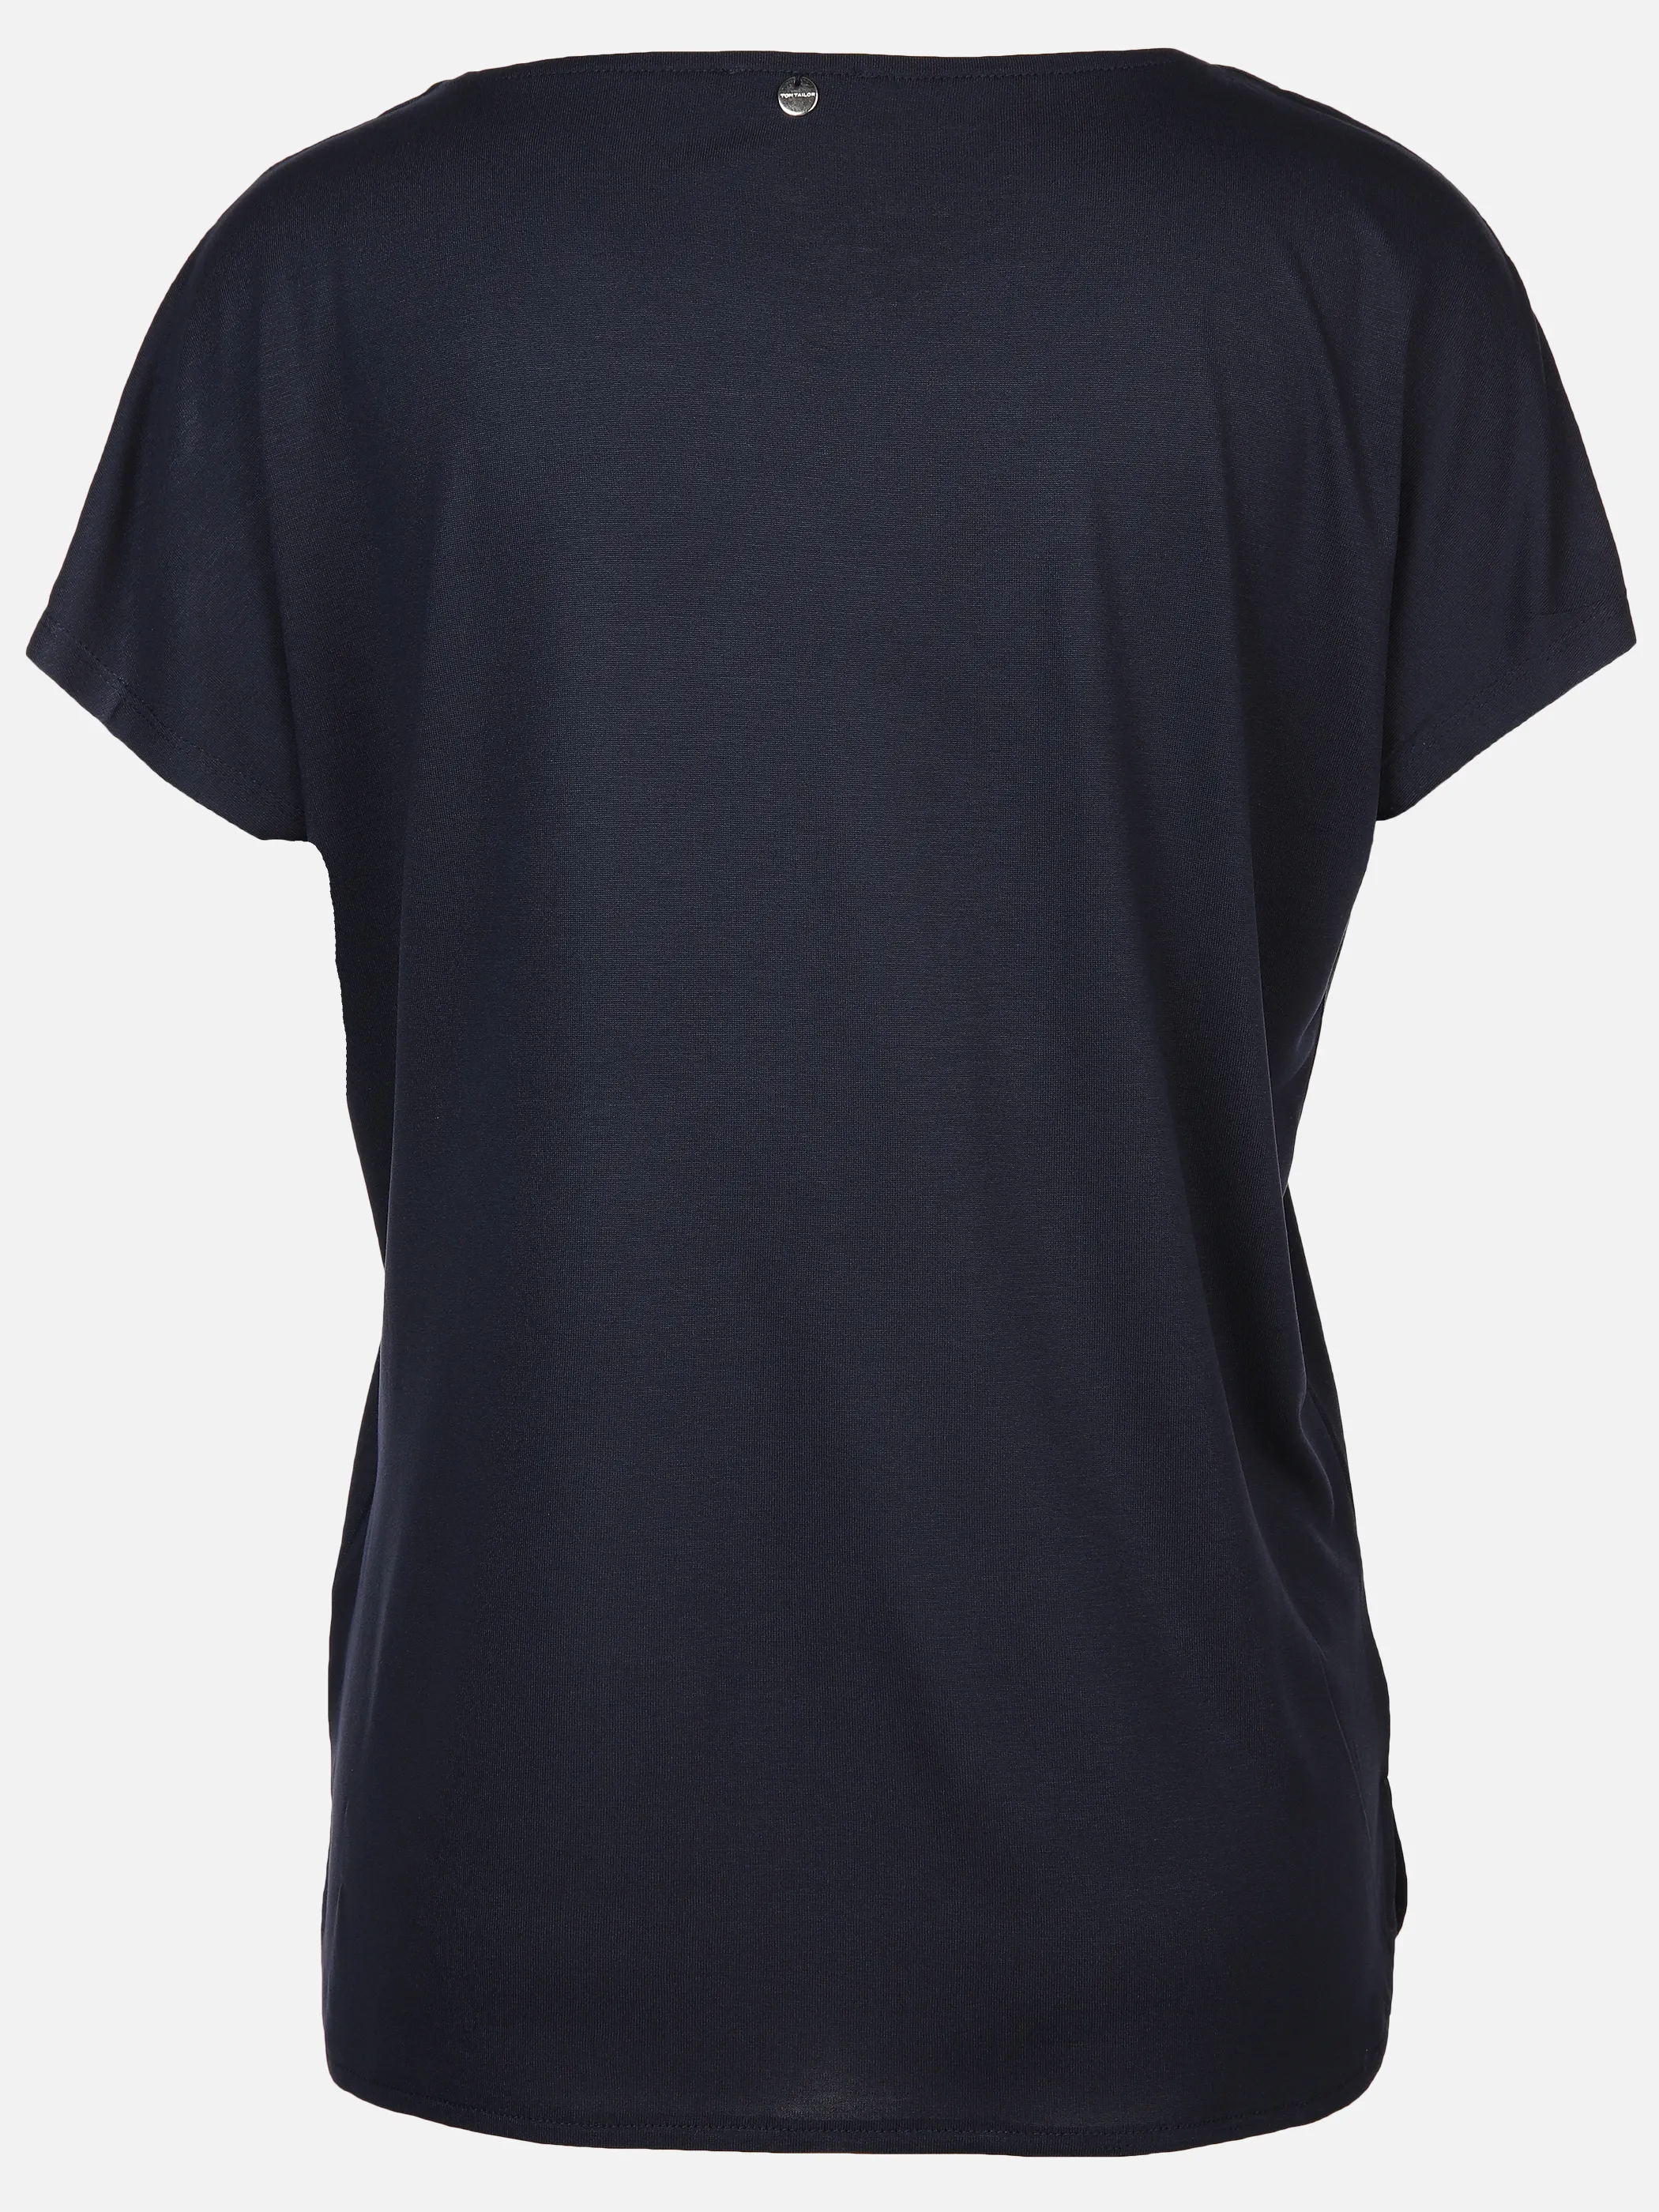 Tom Tailor 1040547 NOS T-shirt fabric mix crew neck Blau 890601 10668 2